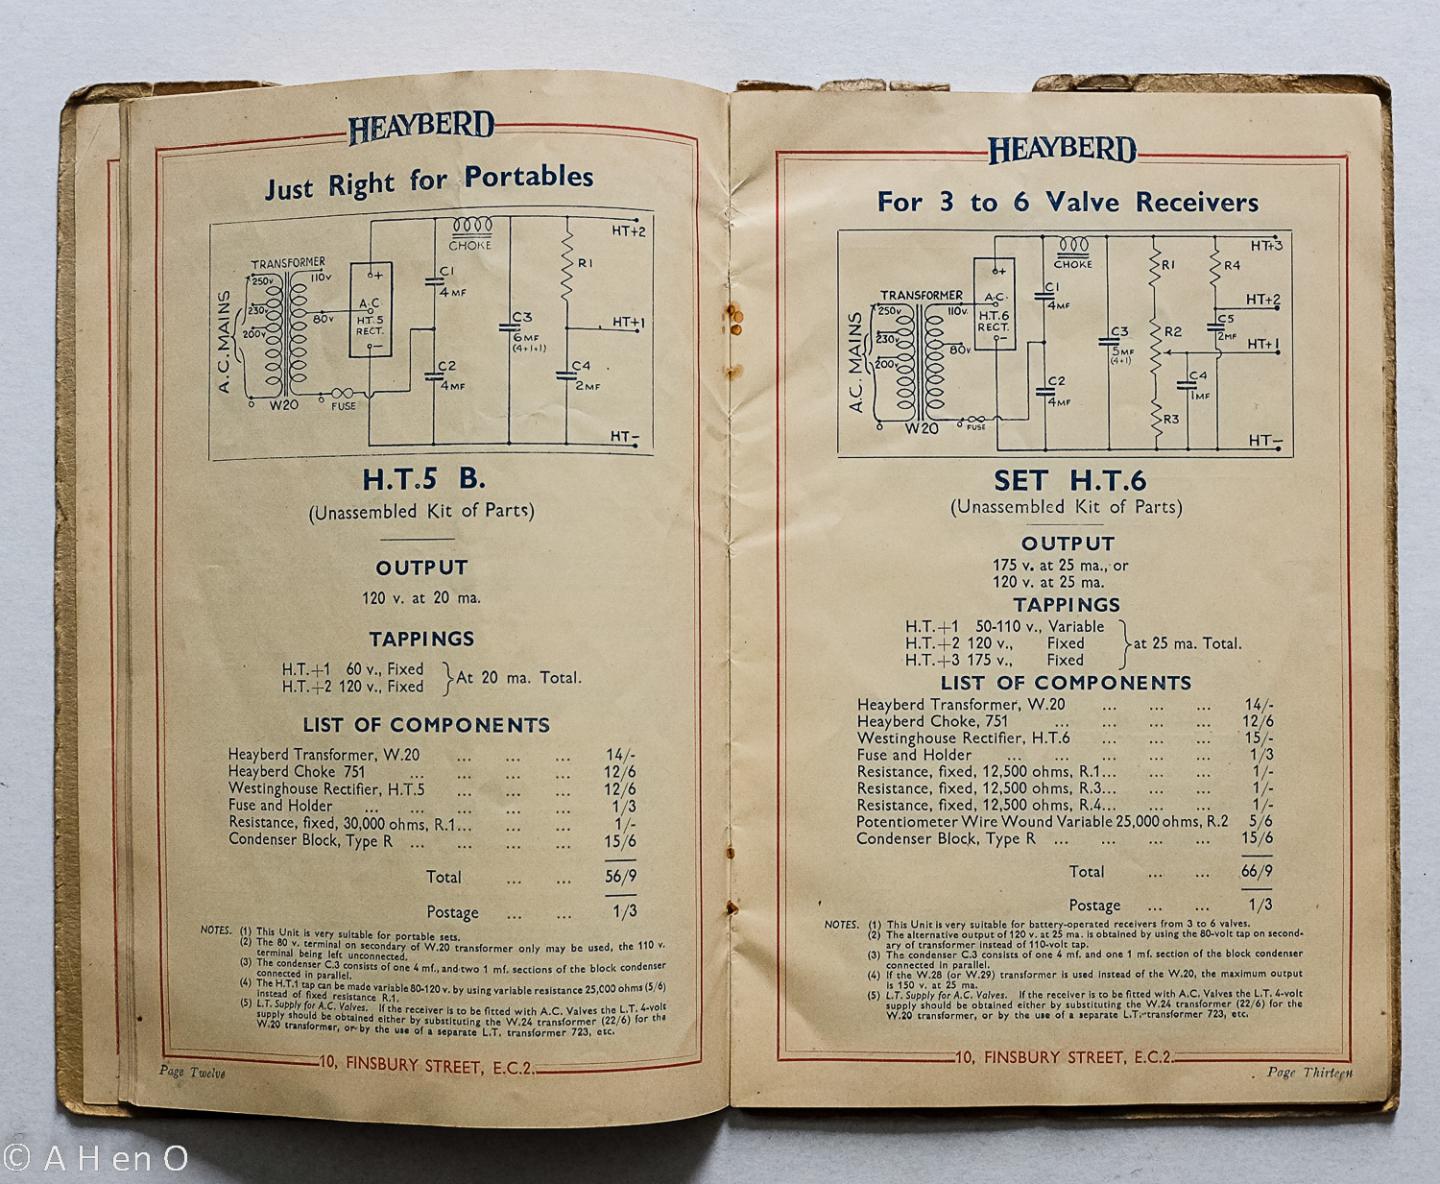  - Heayberd 1933 catalogue of Radio Mains equipment